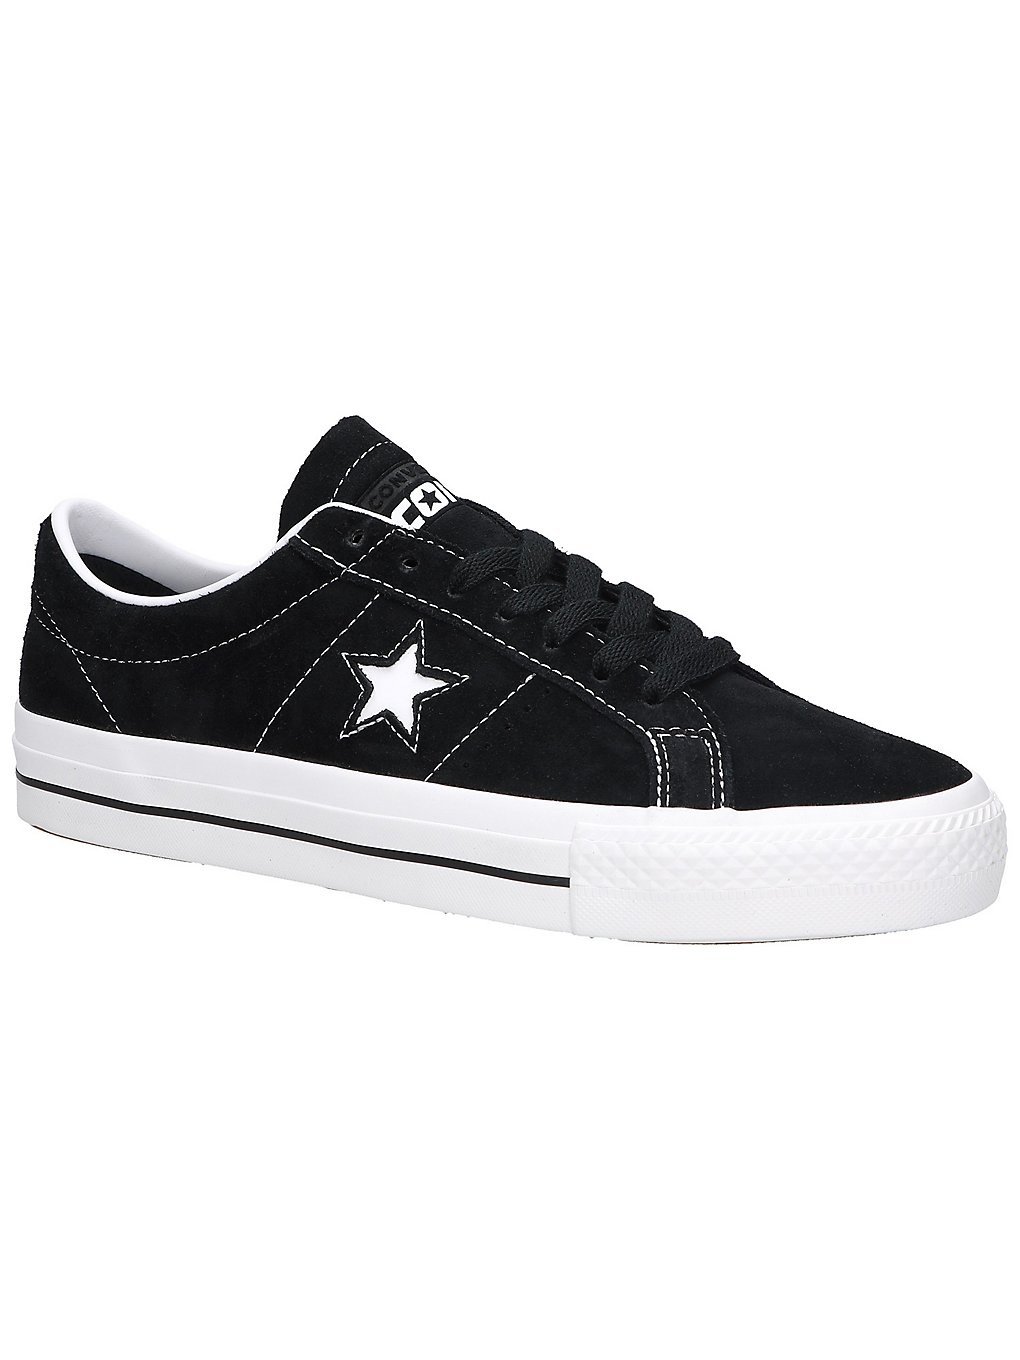 Converse One Star Pro OX Skate Shoes black/white/white